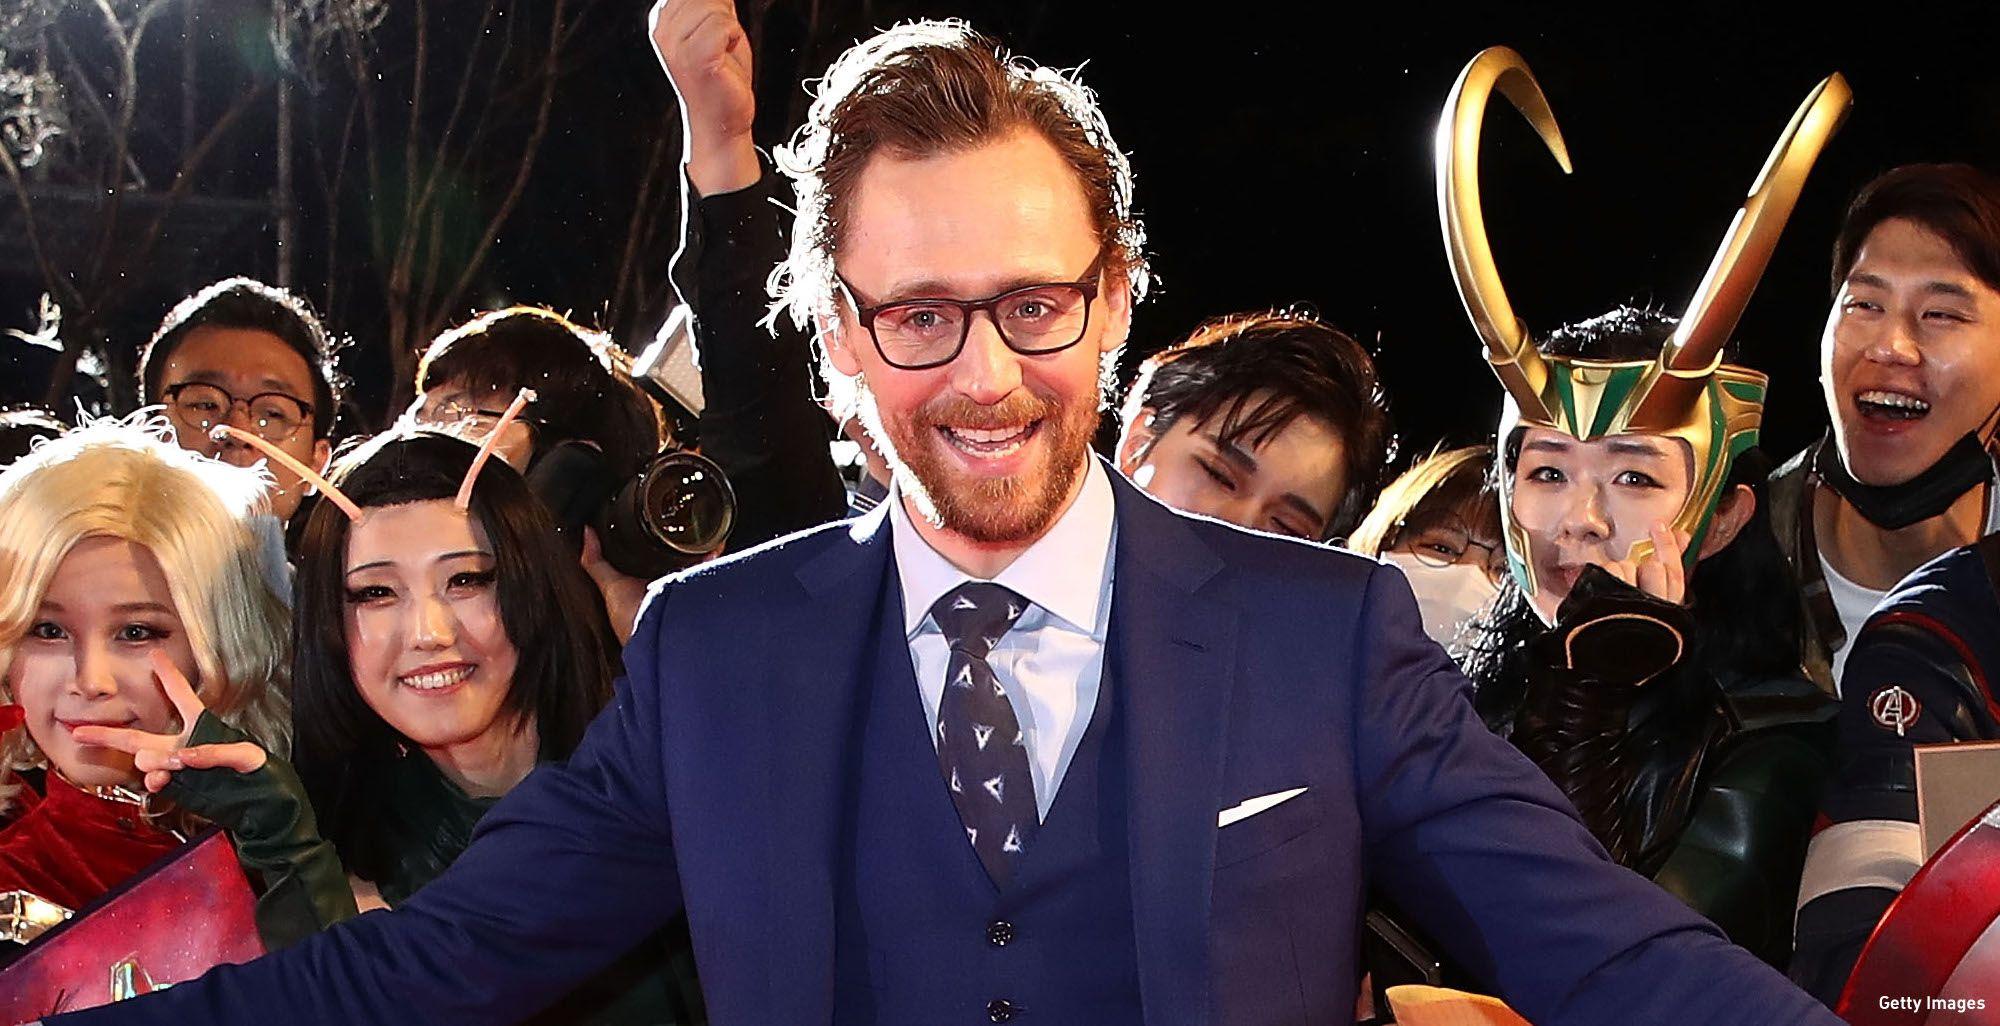 WATCH: Tom Hiddleston Surprises 'Avengers' Fans Dressed as Loki